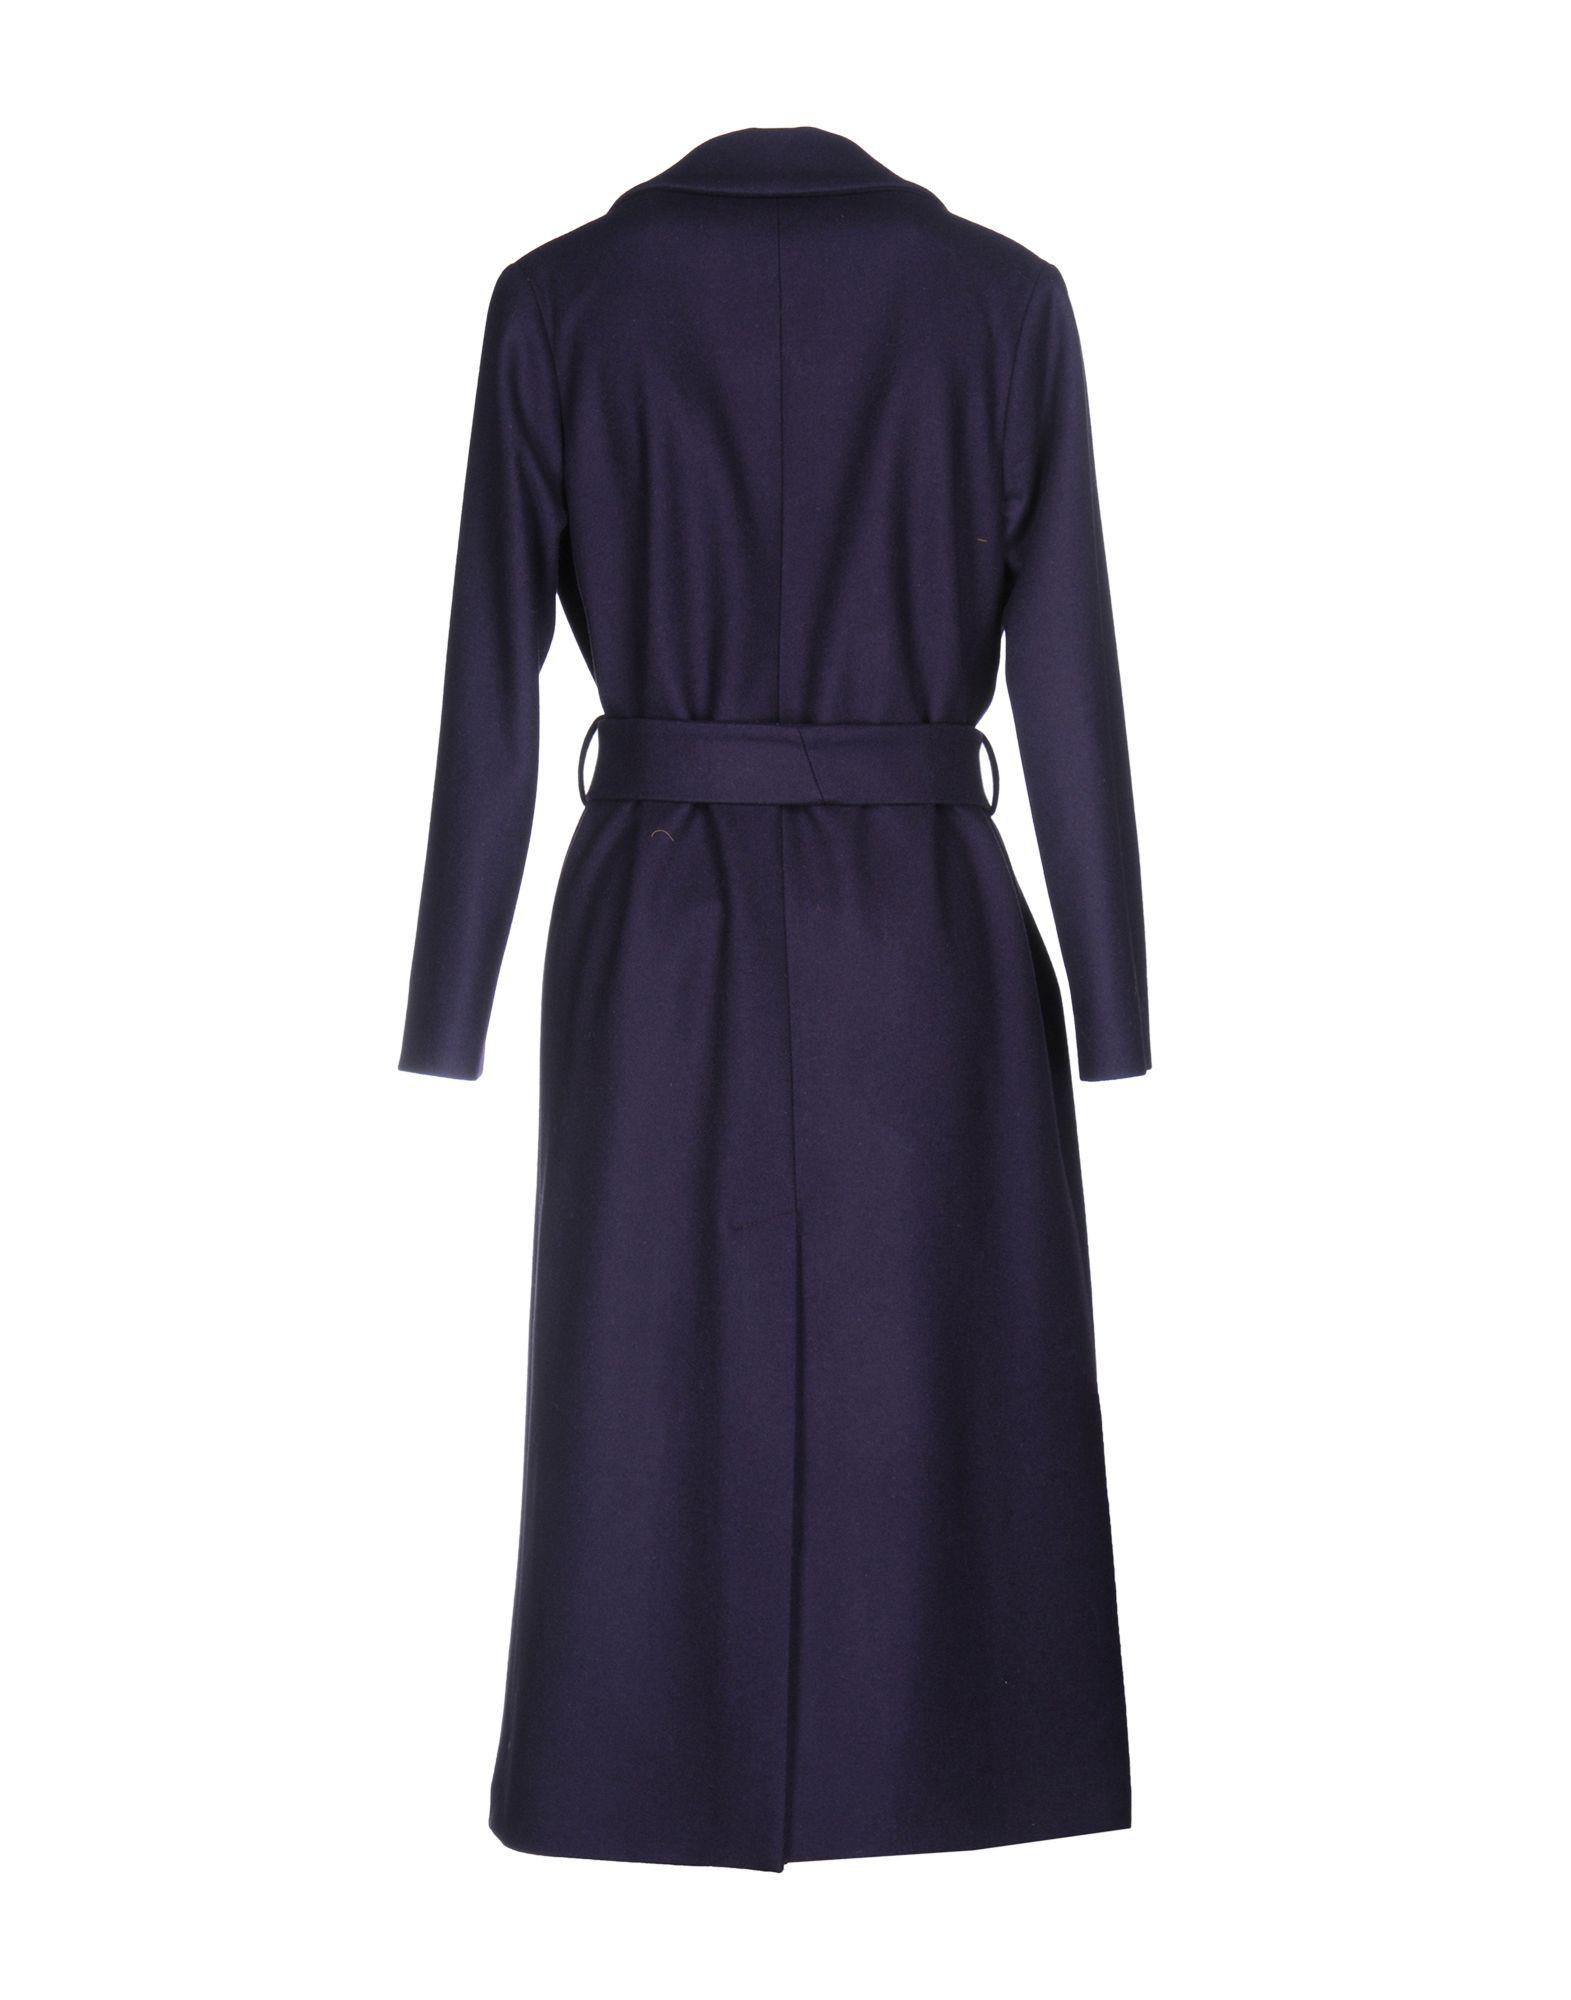 Lyst - Annie P Coat in Purple